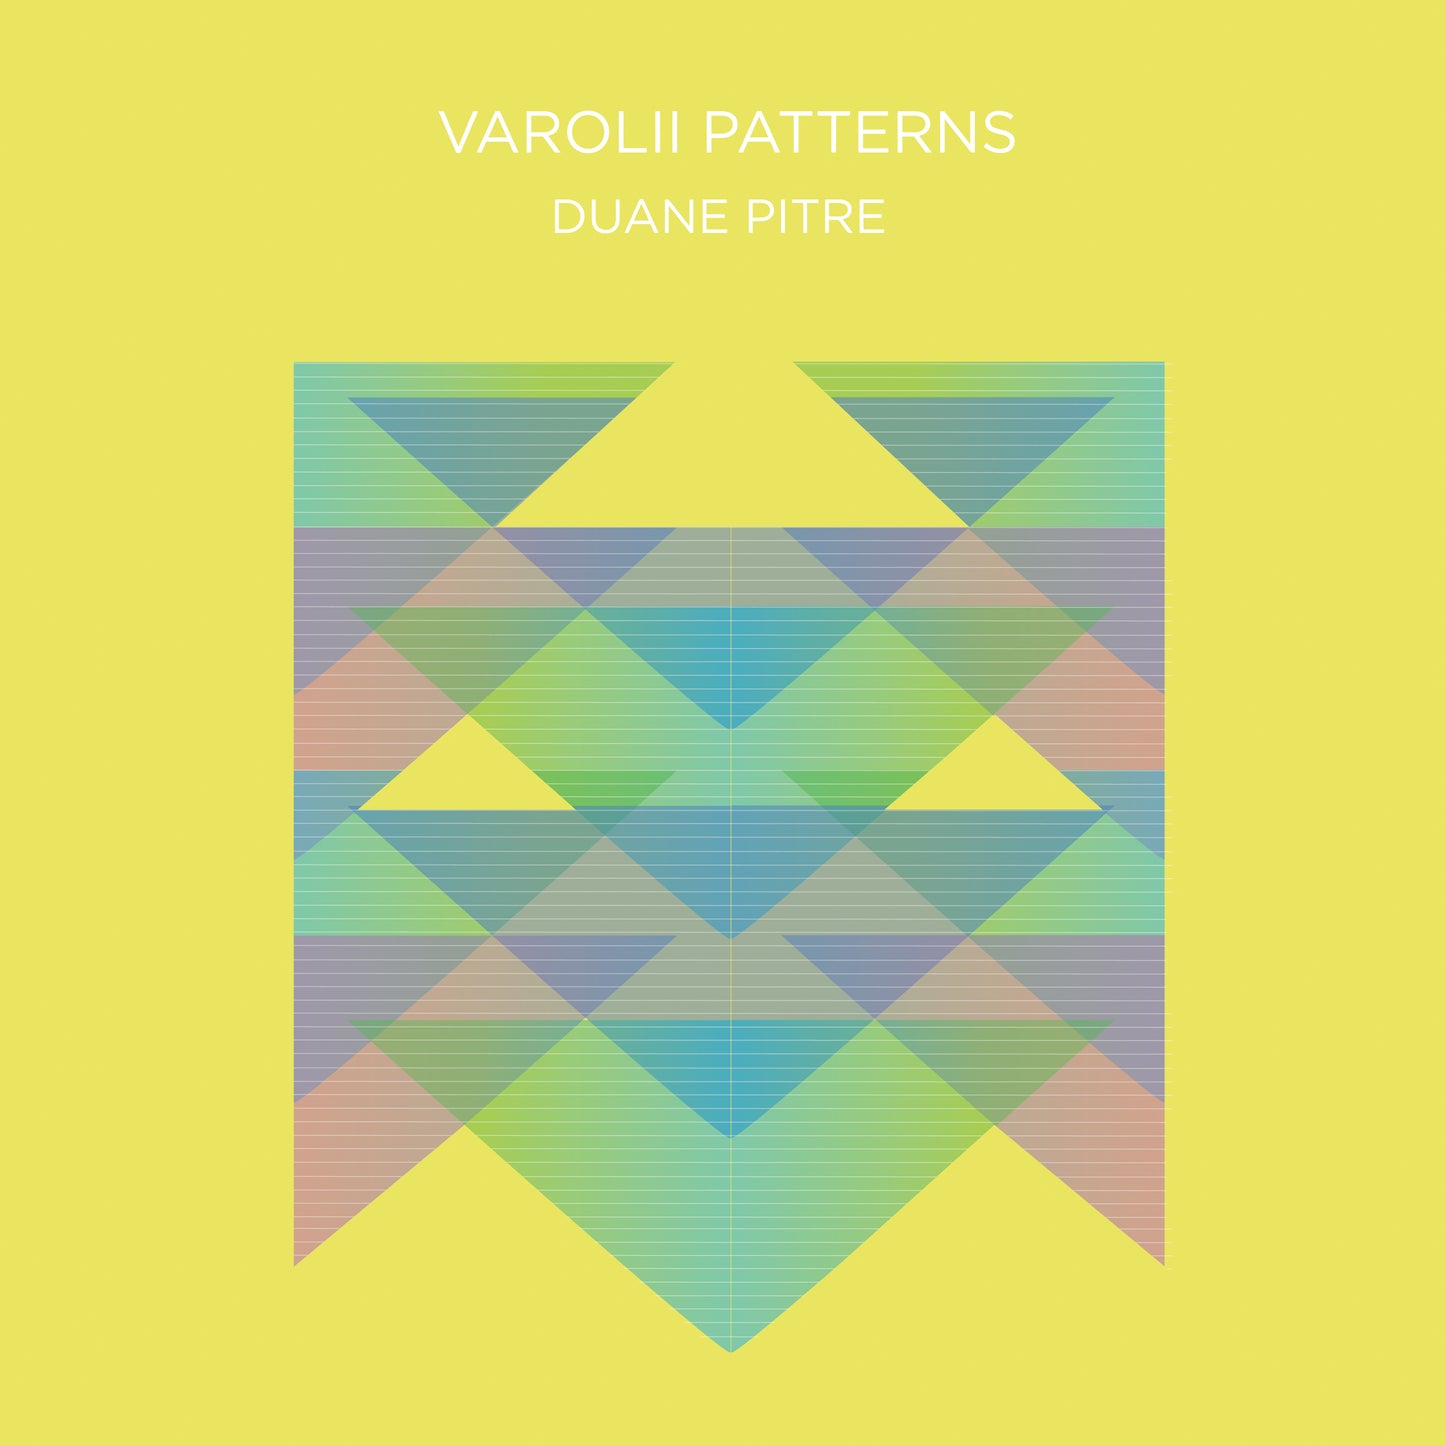 Duane Pitre - Varolii Patterns - Tape